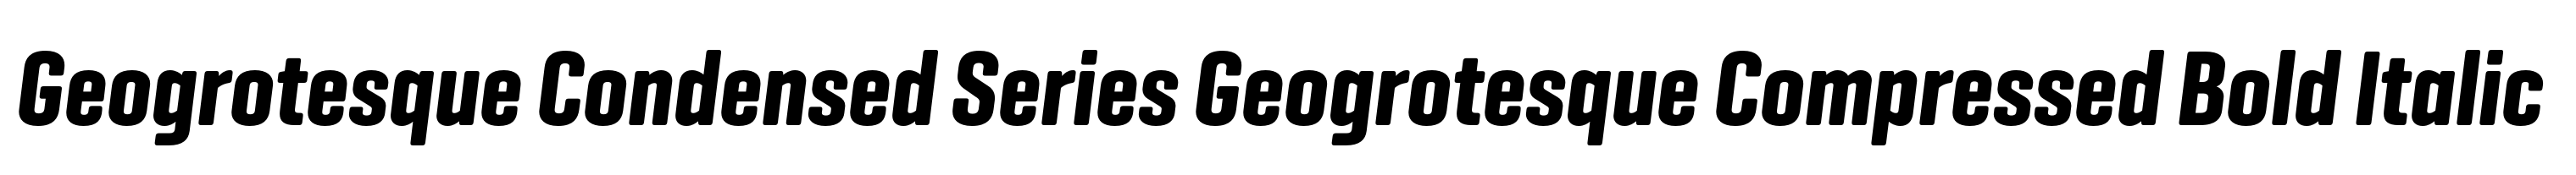 Geogrotesque Condensed Series Geogrotesque Compressed Bold Italic